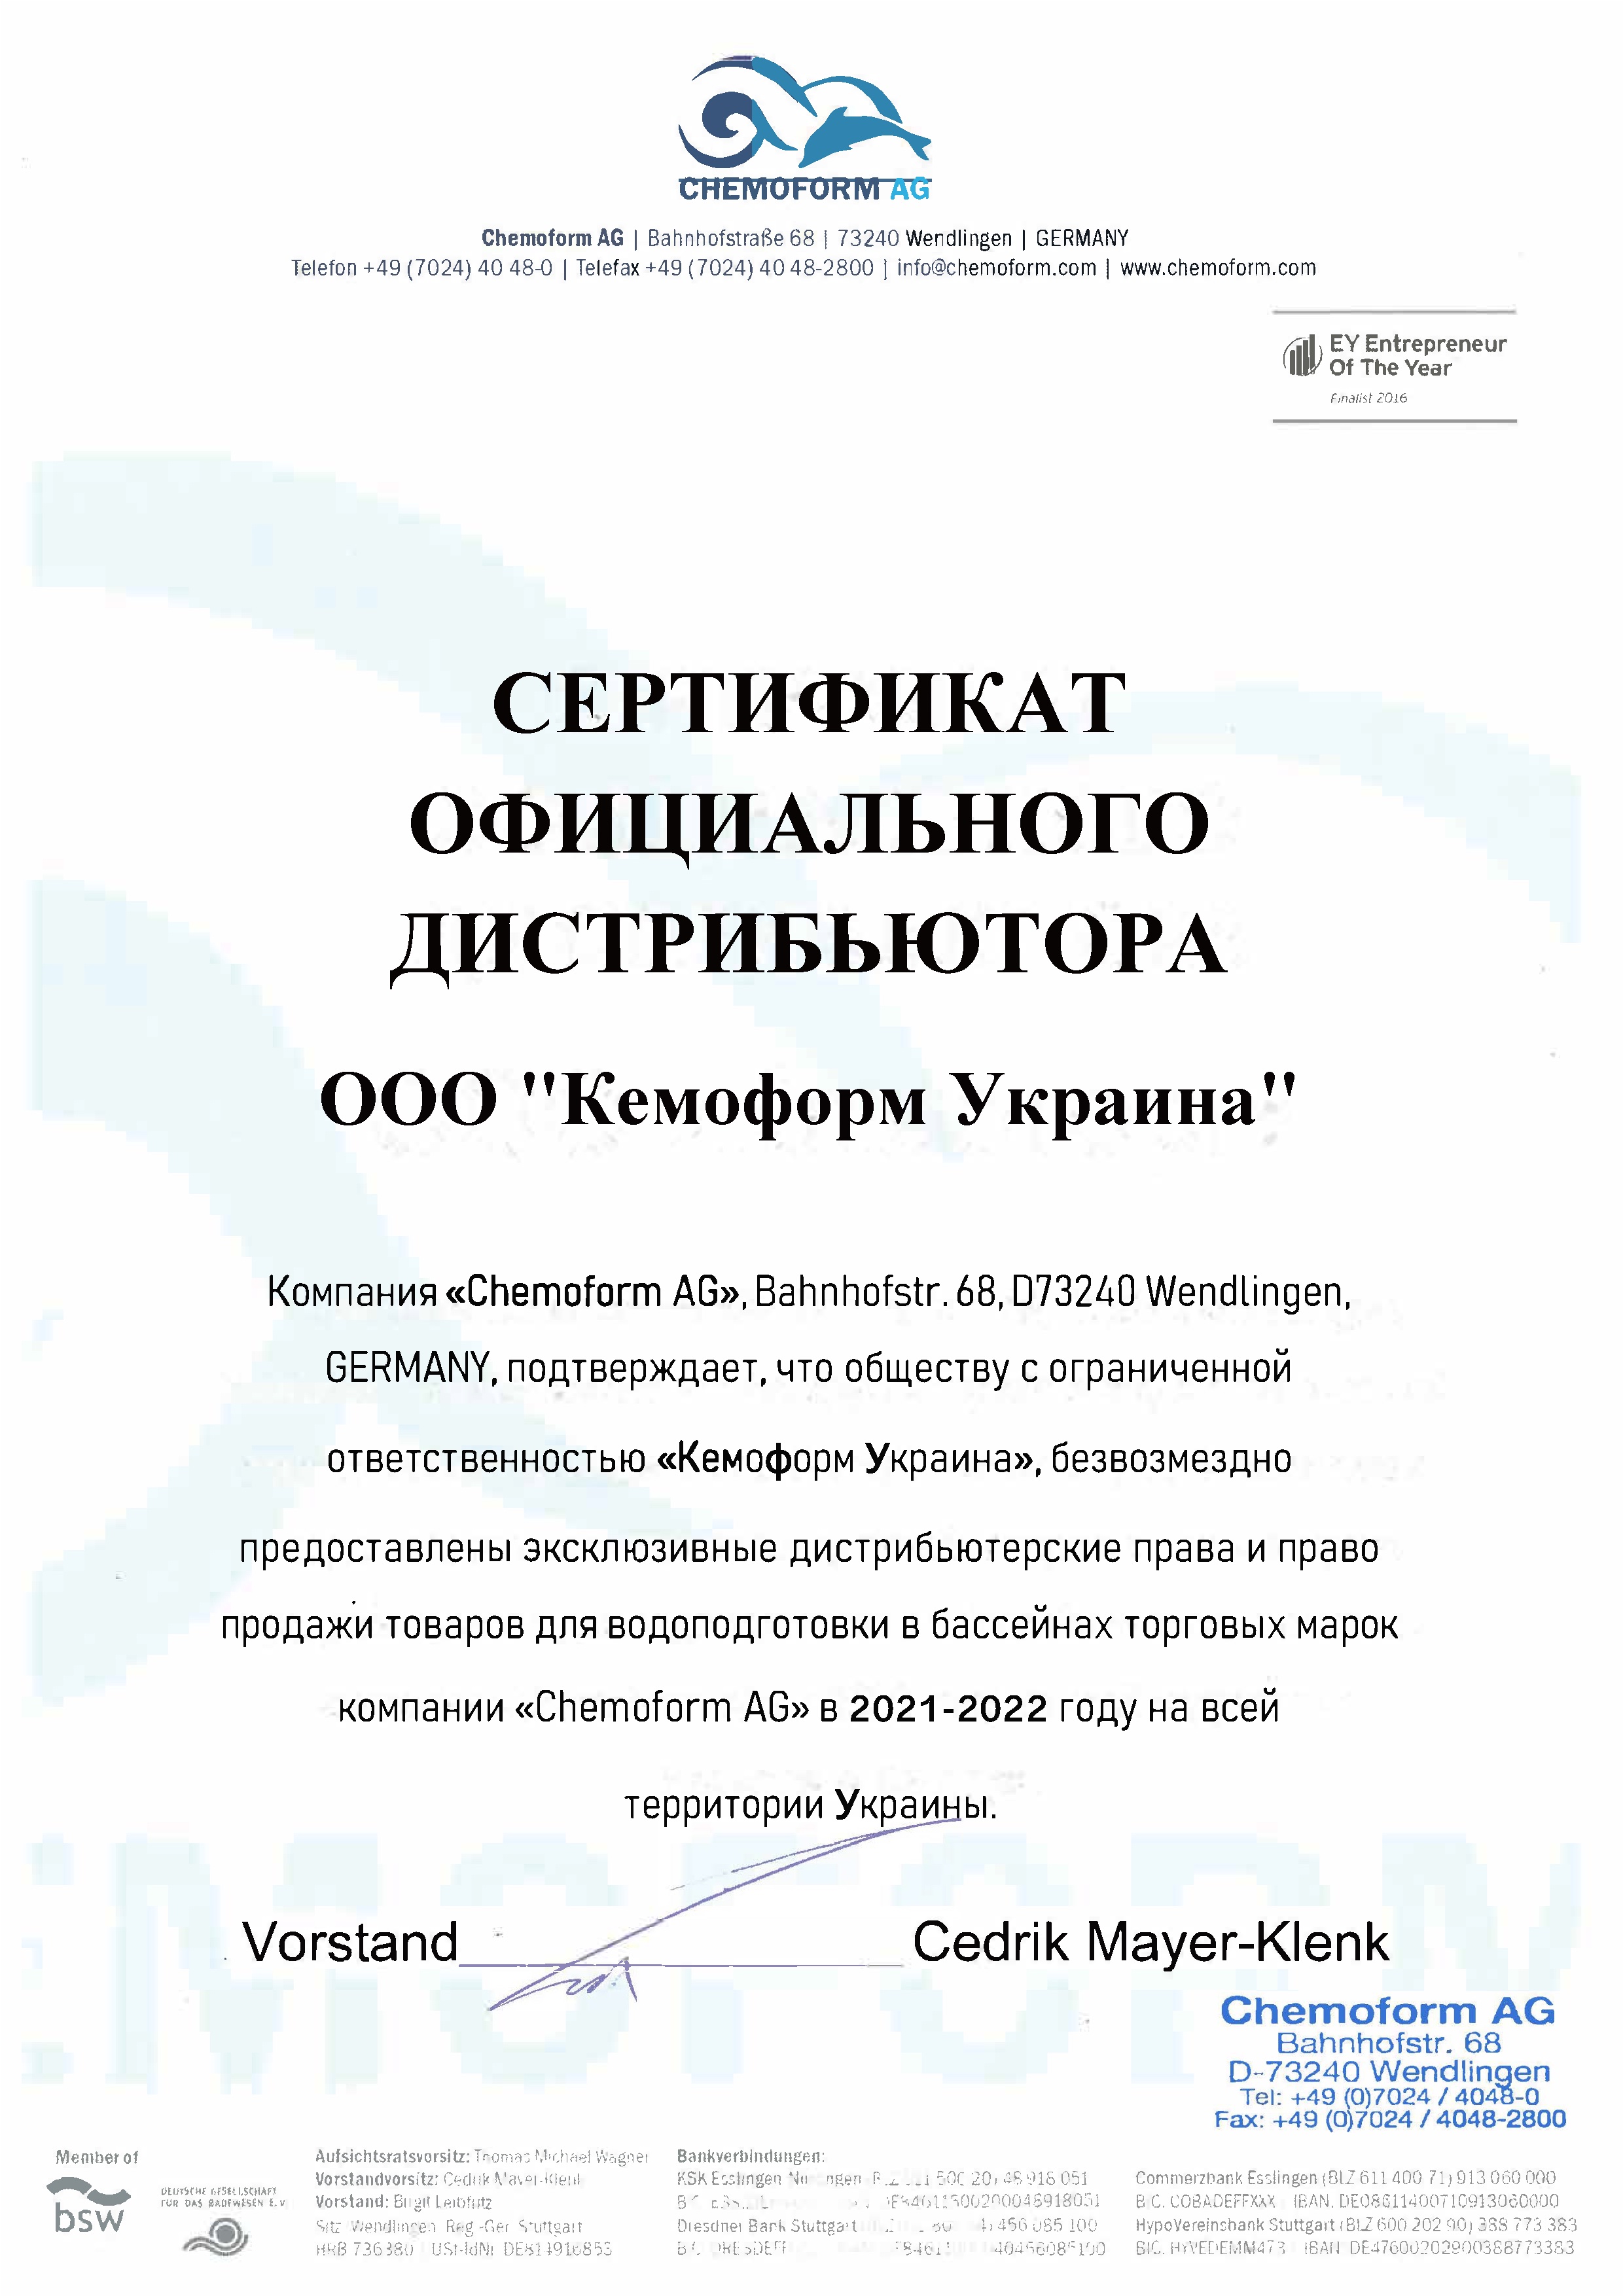 Сертификат дистрибьютора Chemoform AG.png